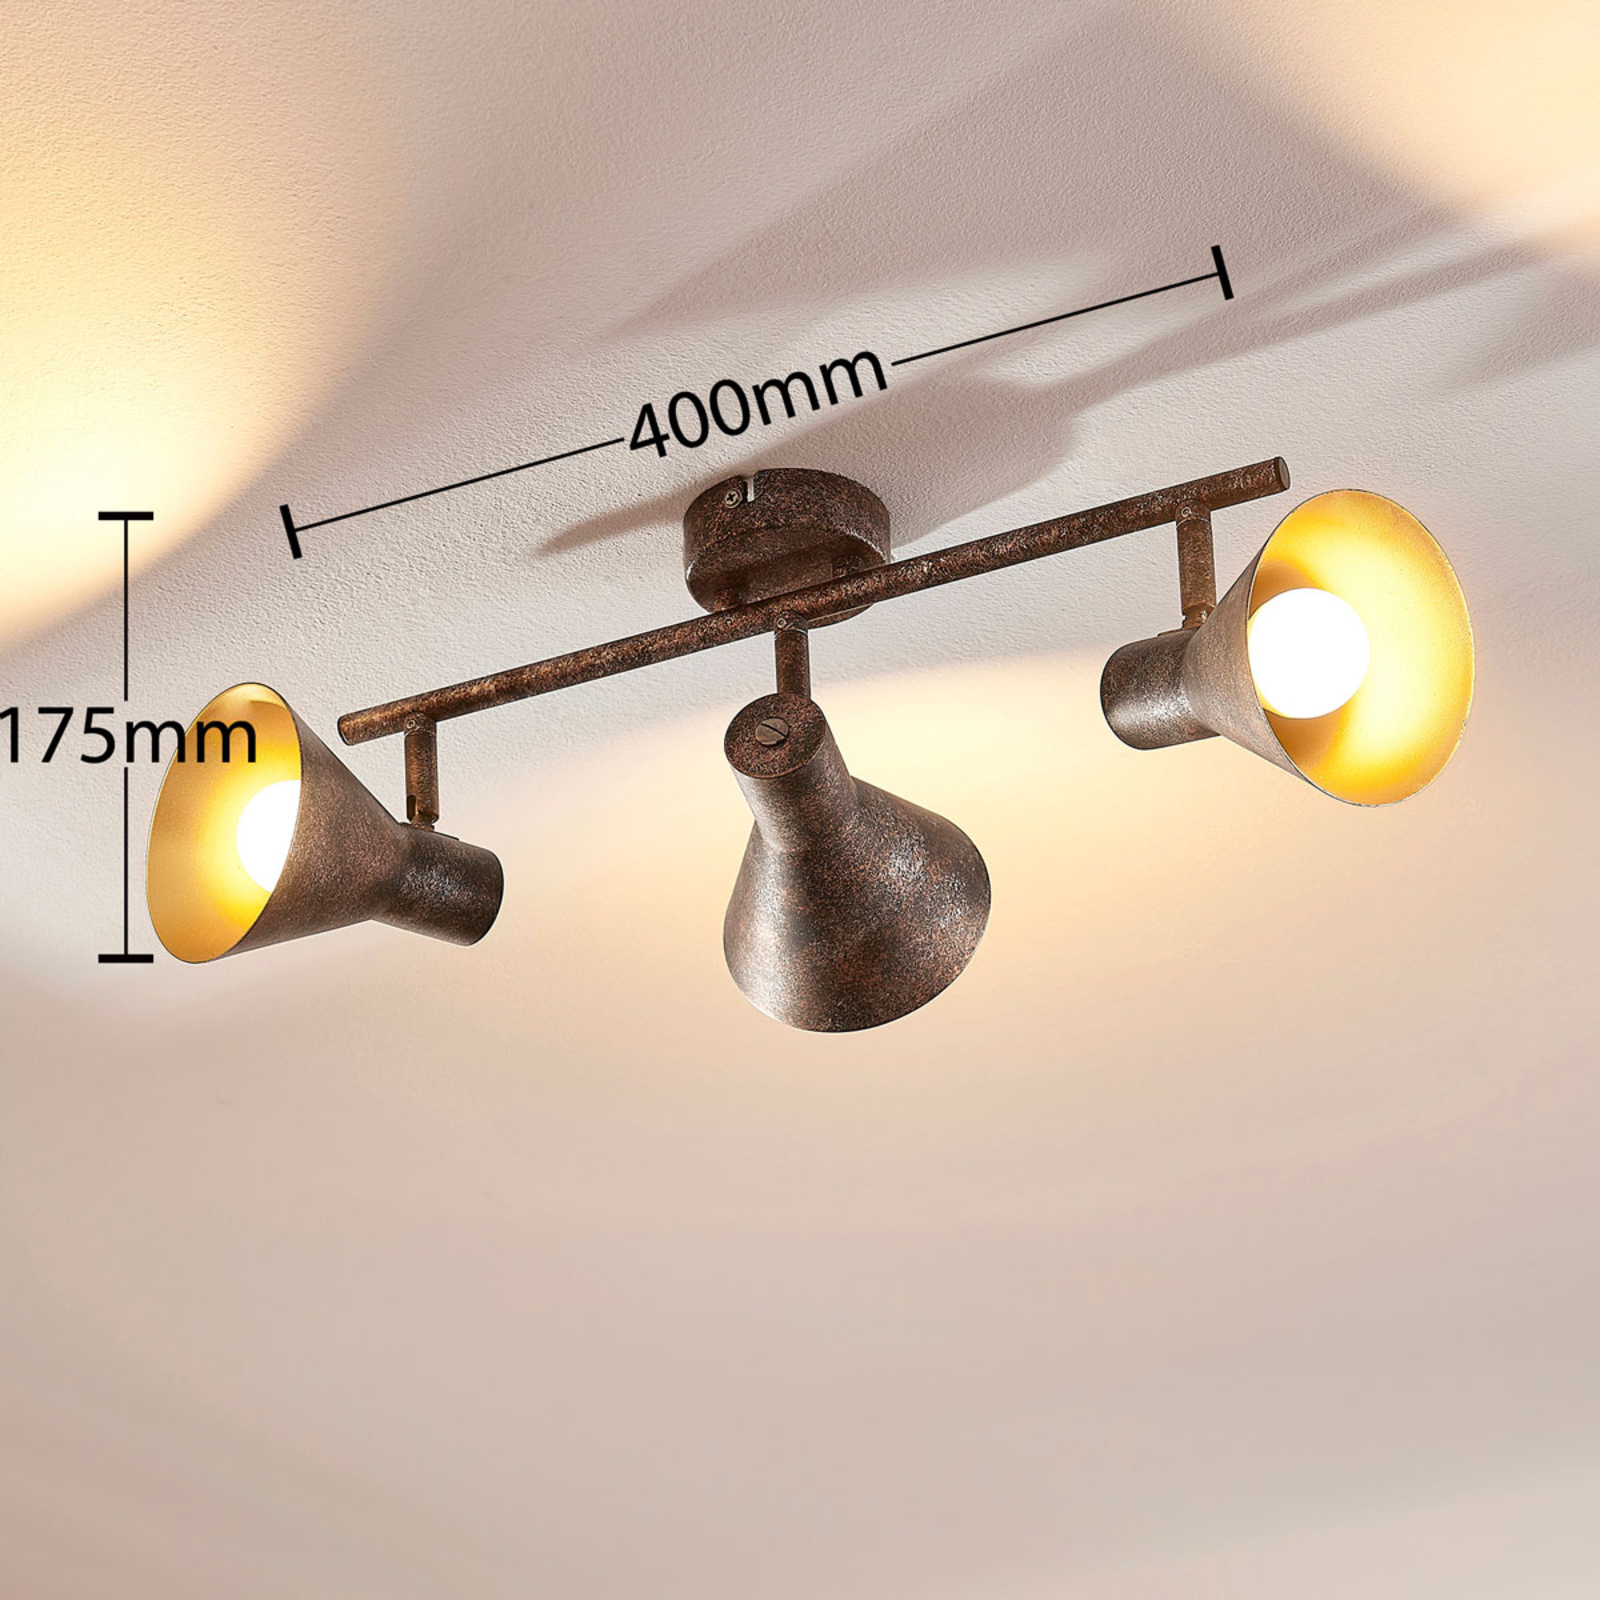 Elongated Zera LED ceiling lamp with Easydim bulbs